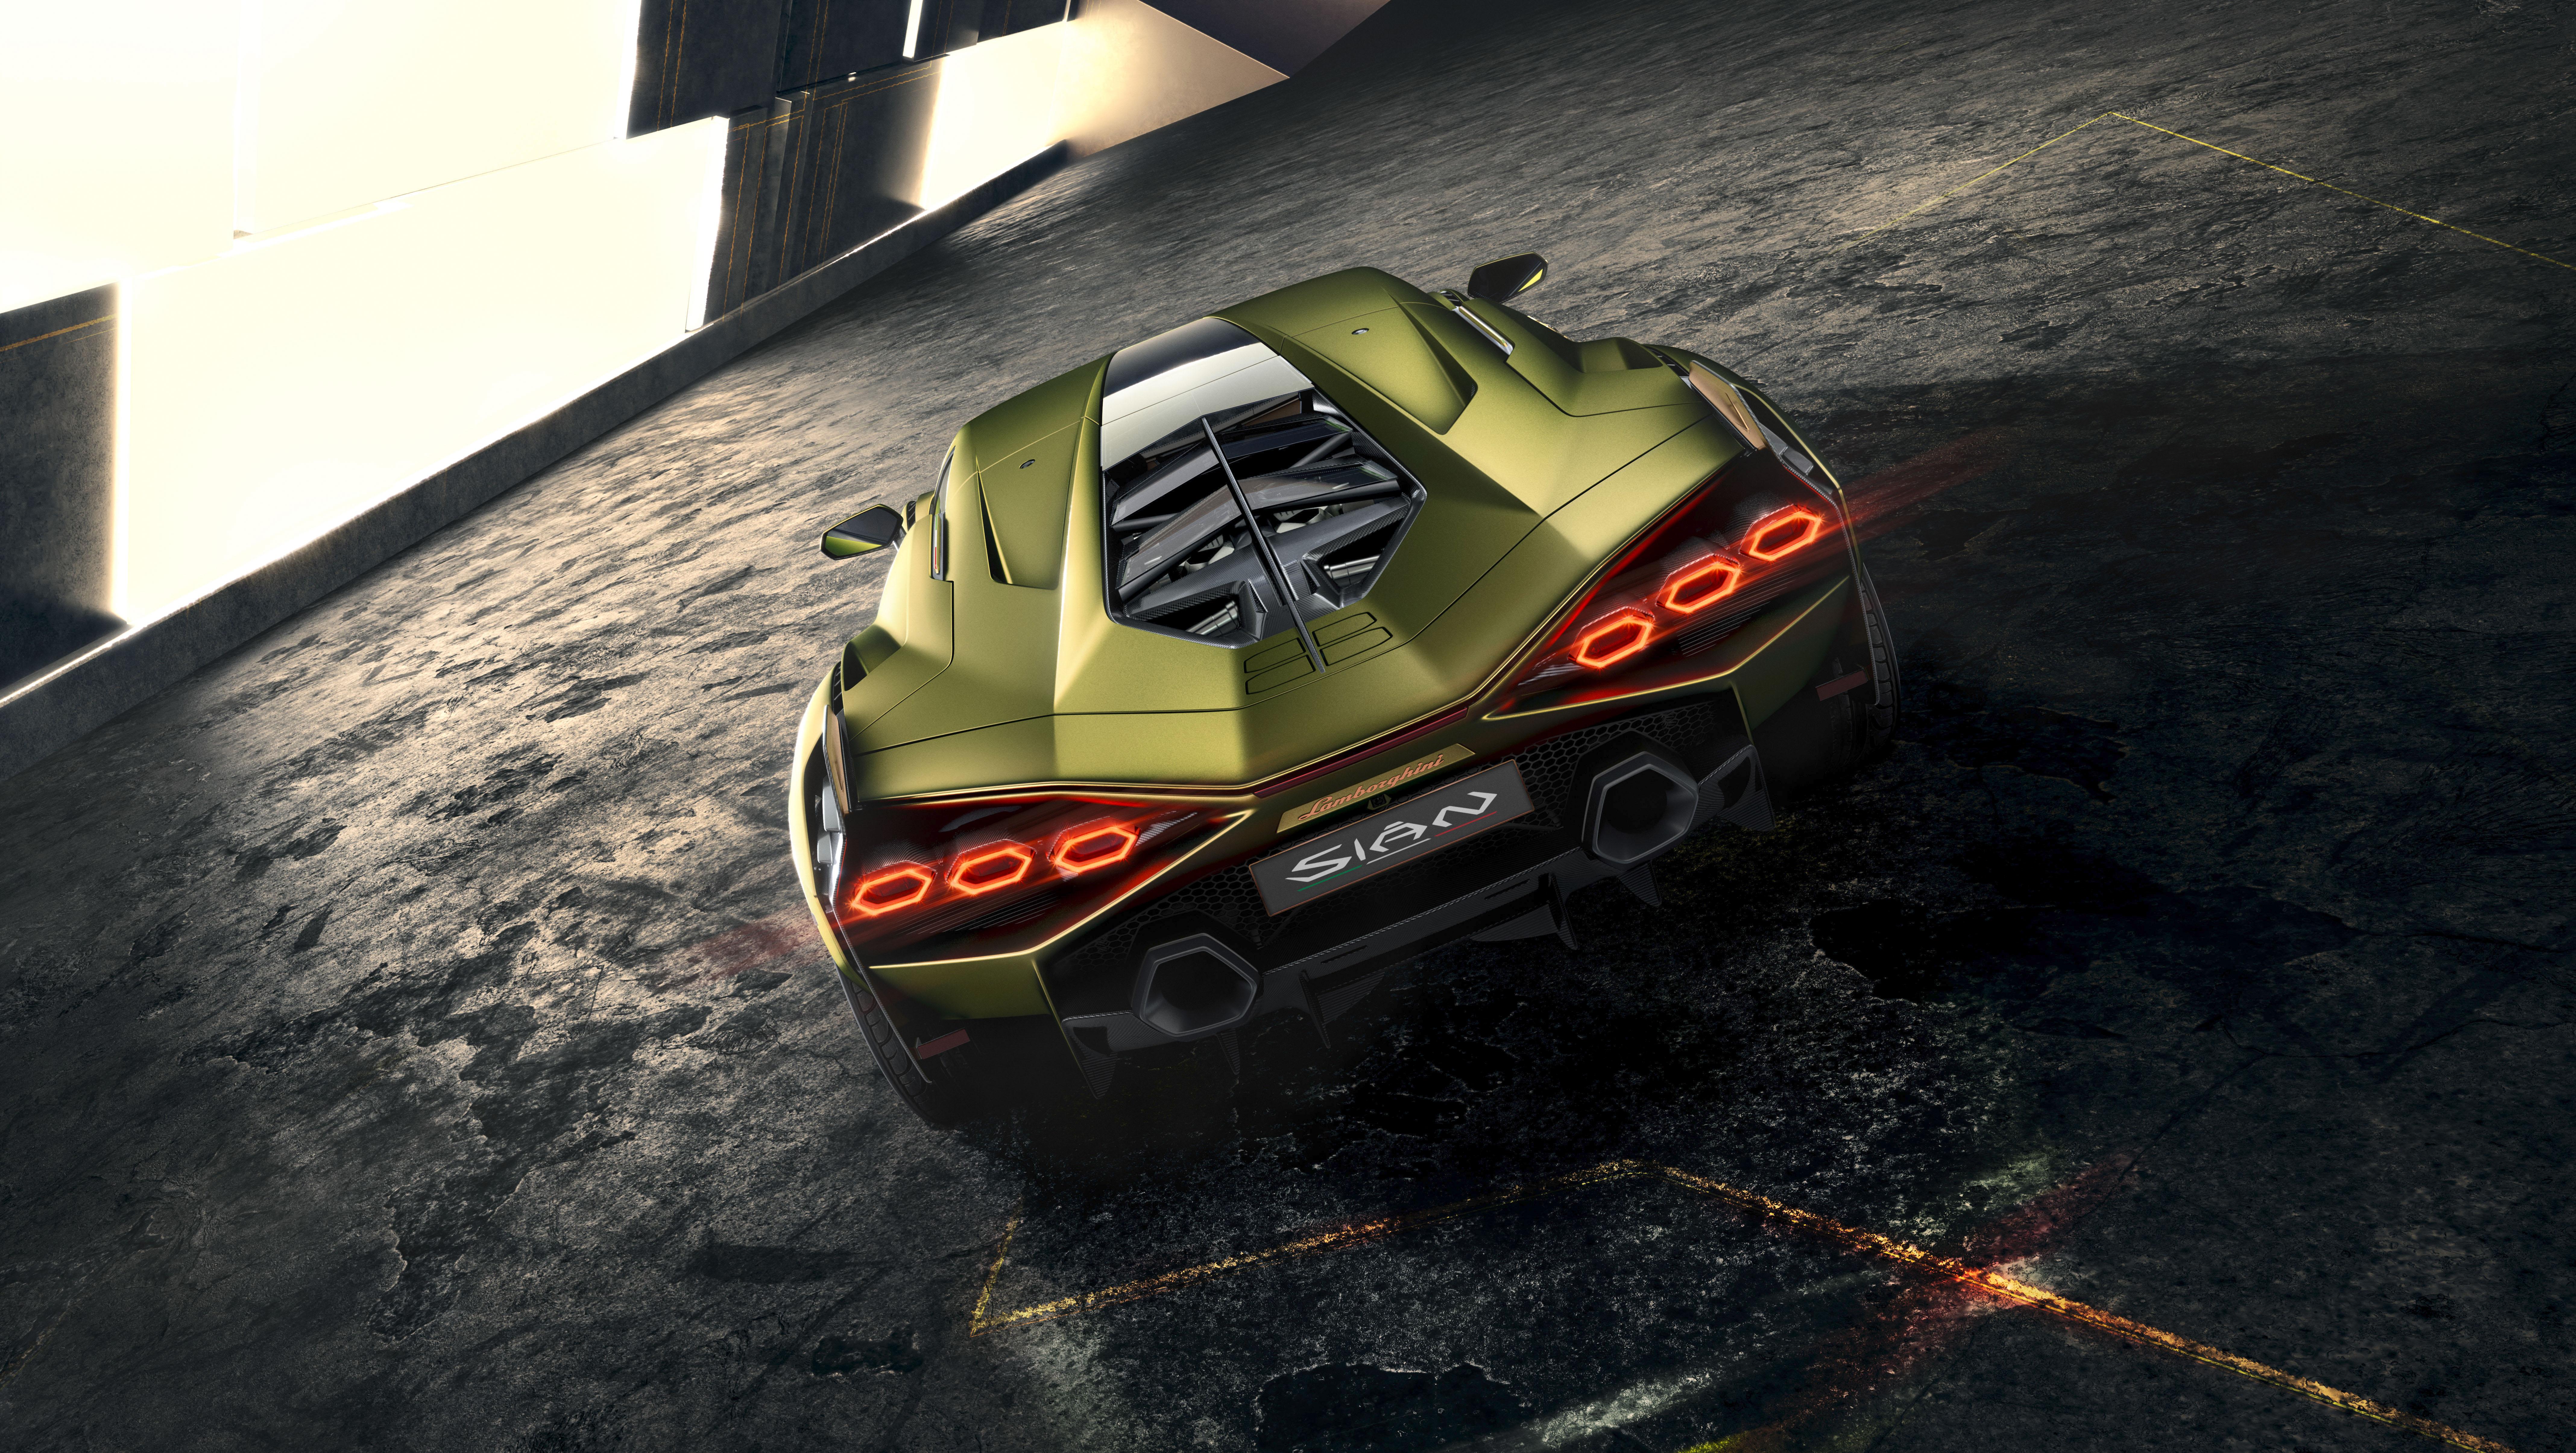 Lamborghini's Reveals 808bhp Hybrid Supercar Called The Sián